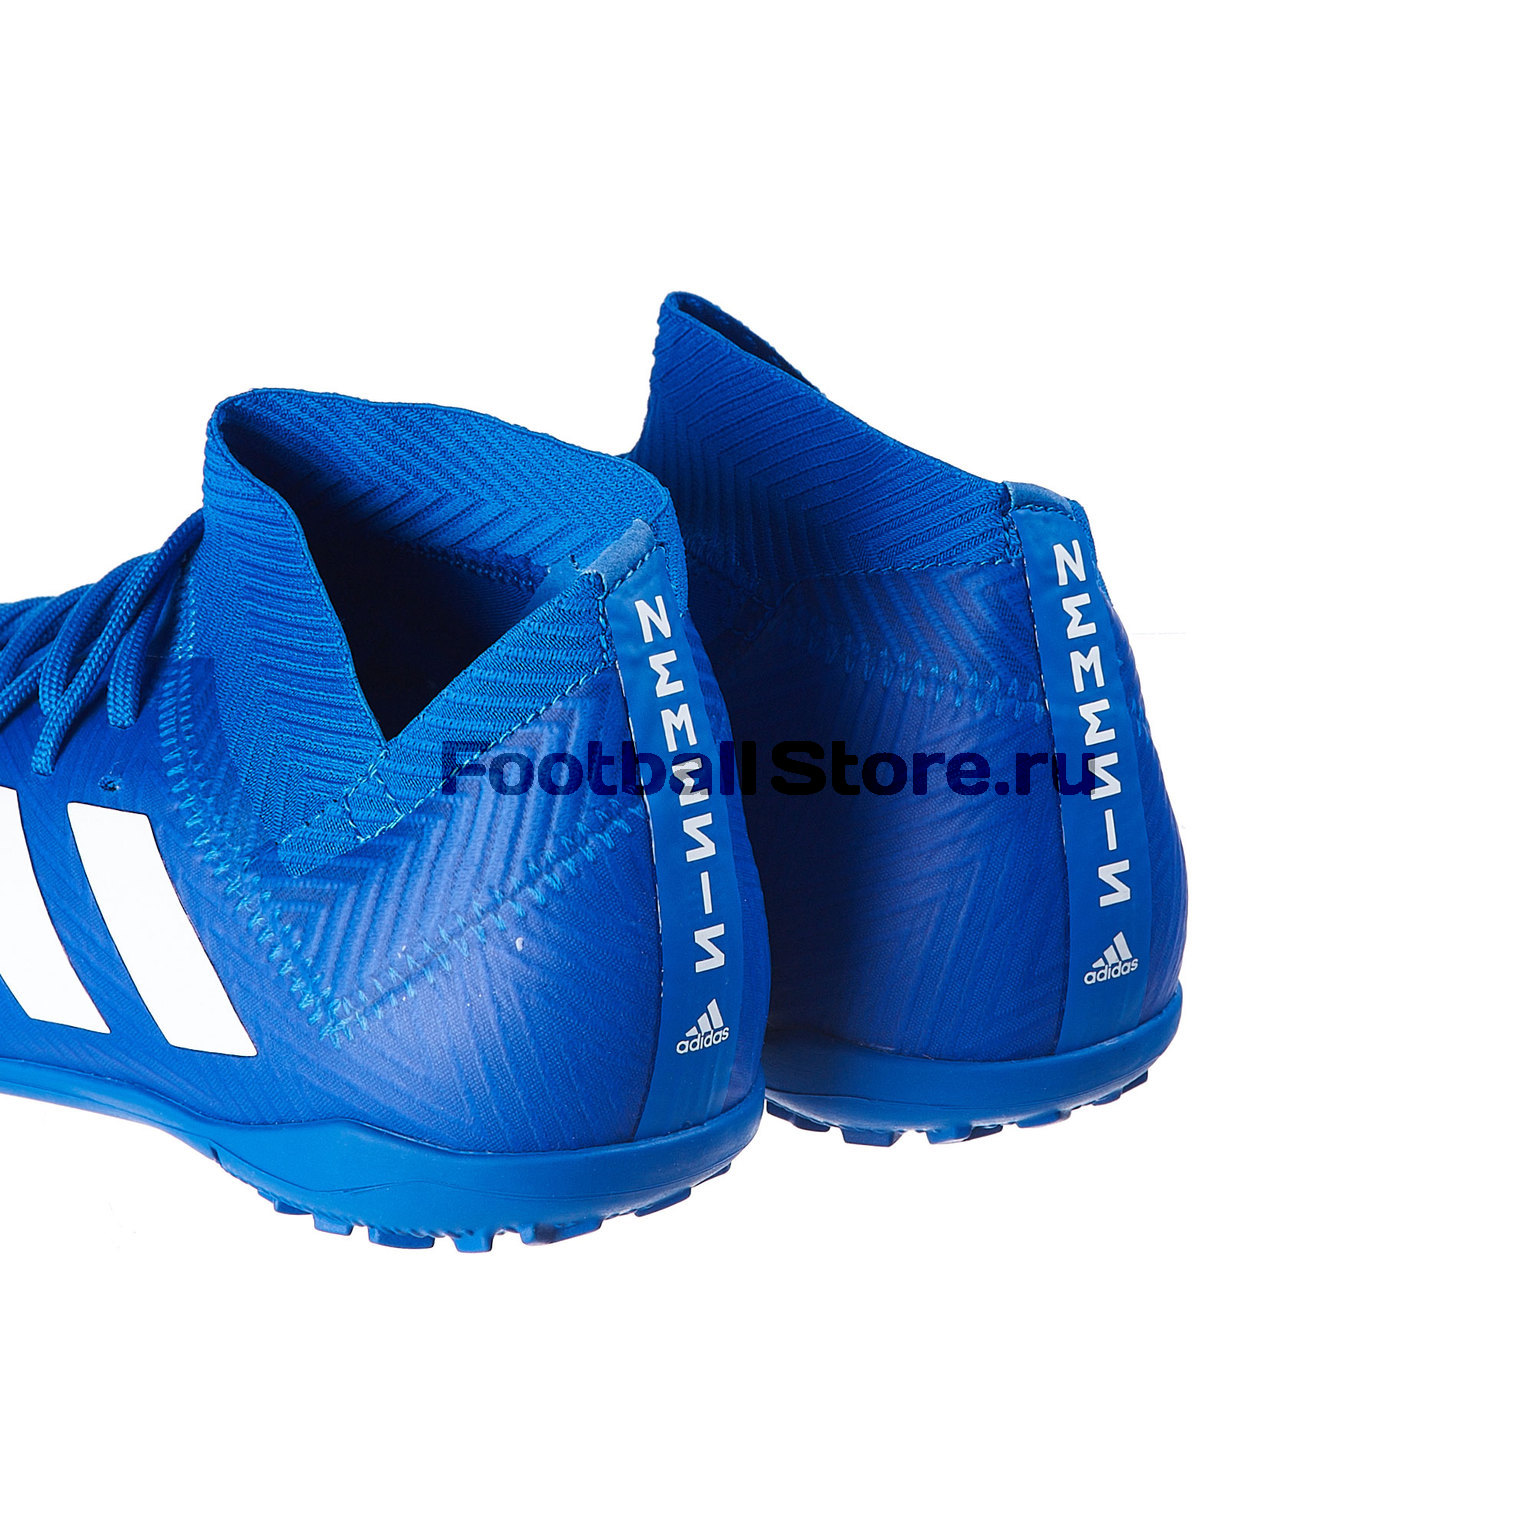 Шиповки детские Adidas Nemeziz Tango 18.3 TF DB2378